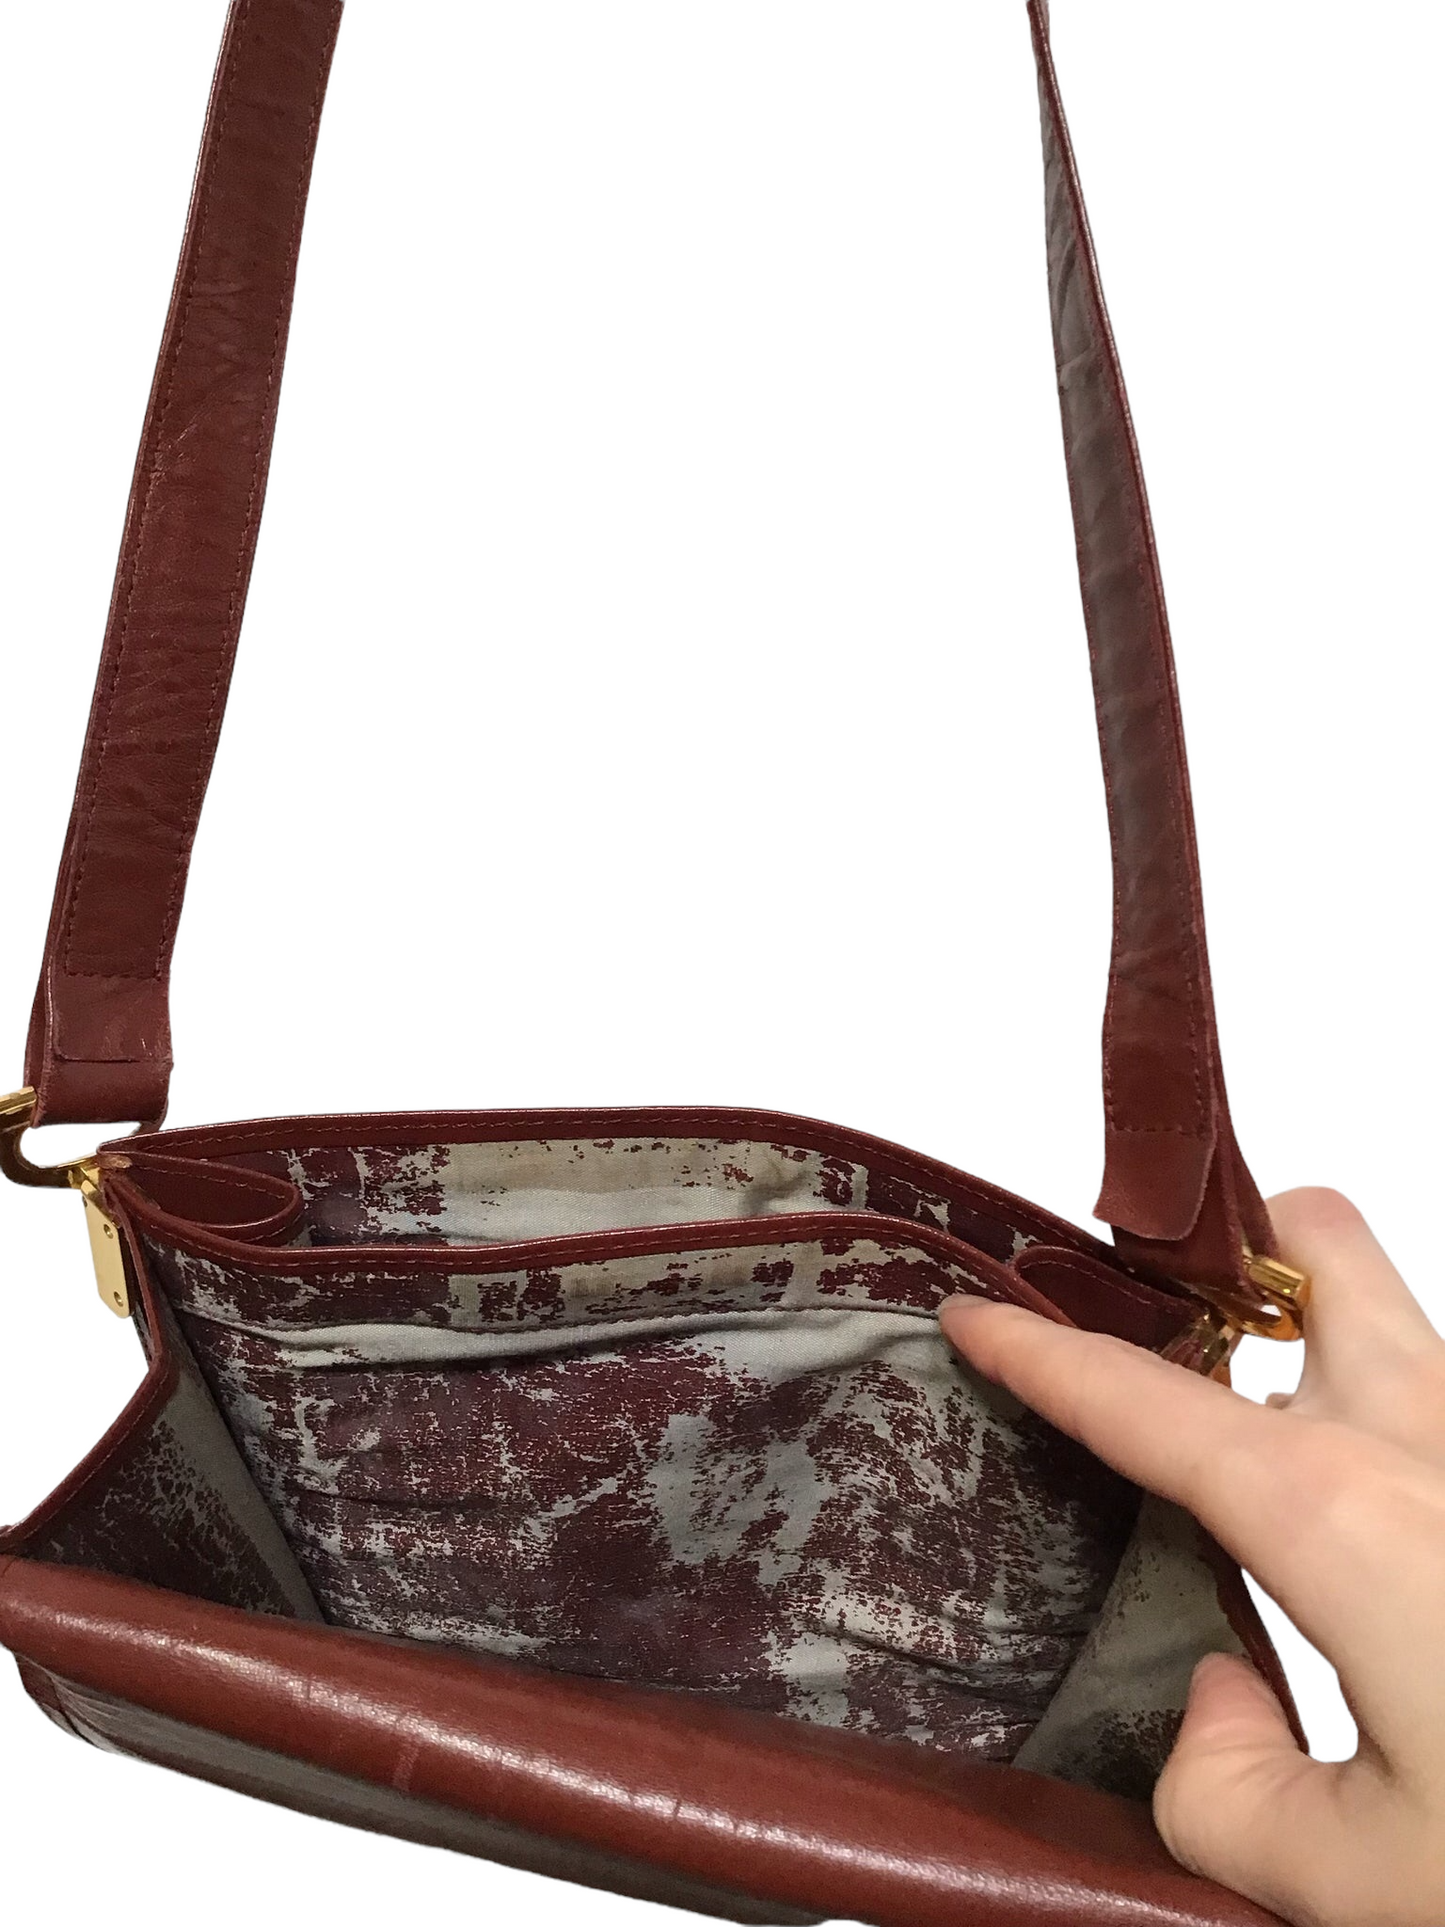 Cartier Leather Burgundy Satchel Bag